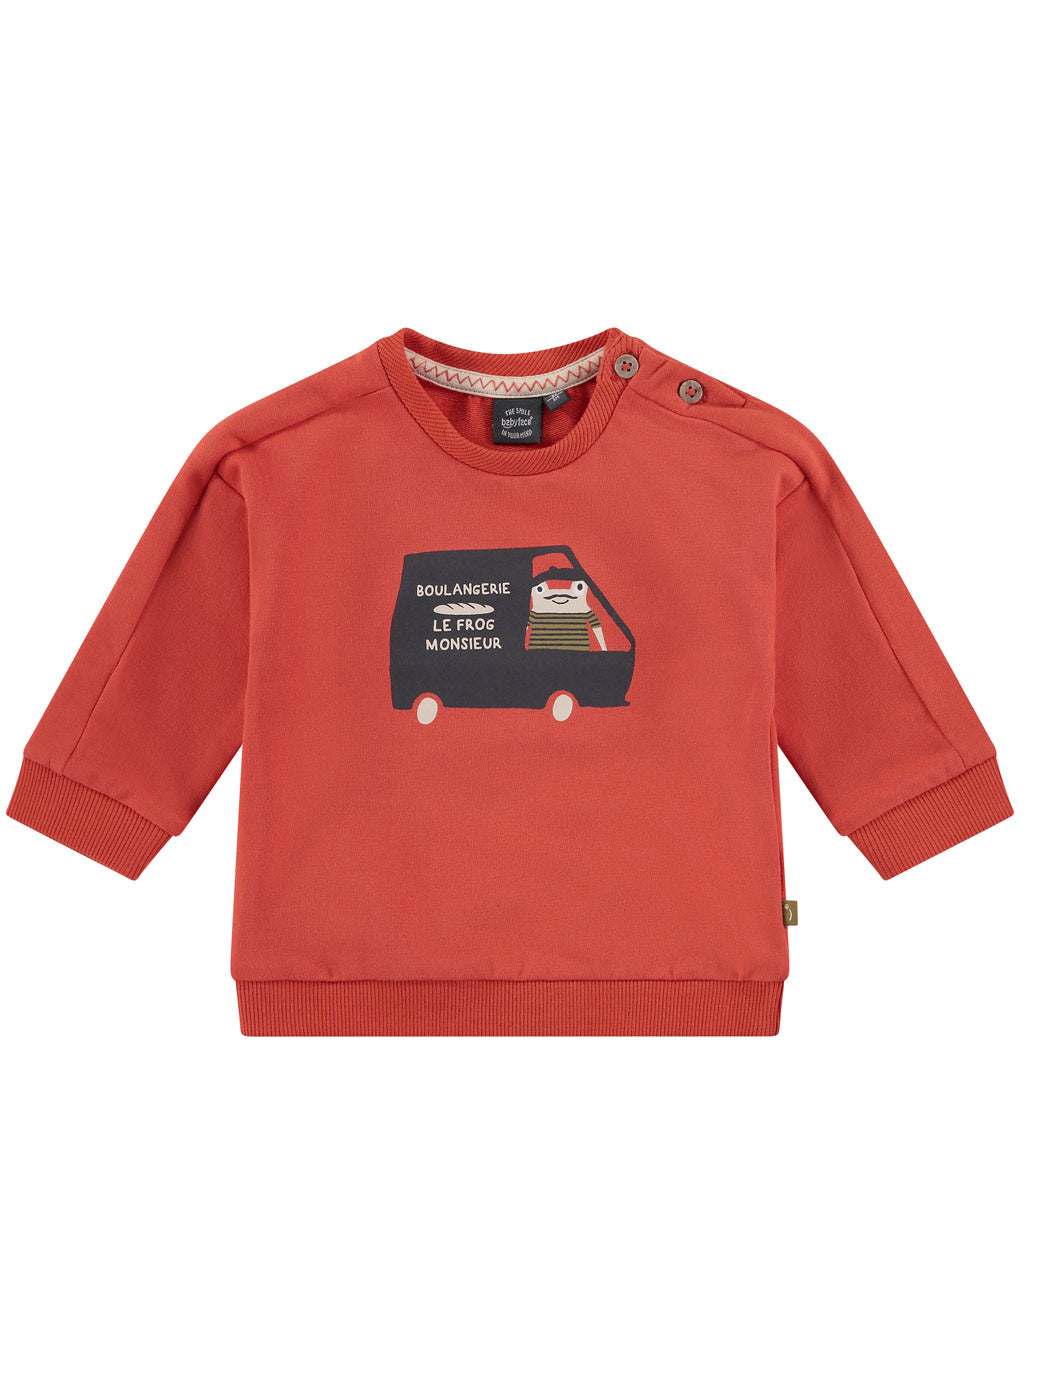 Babyface - Baby Boys Sweatshirt-NWB23427405 Orange